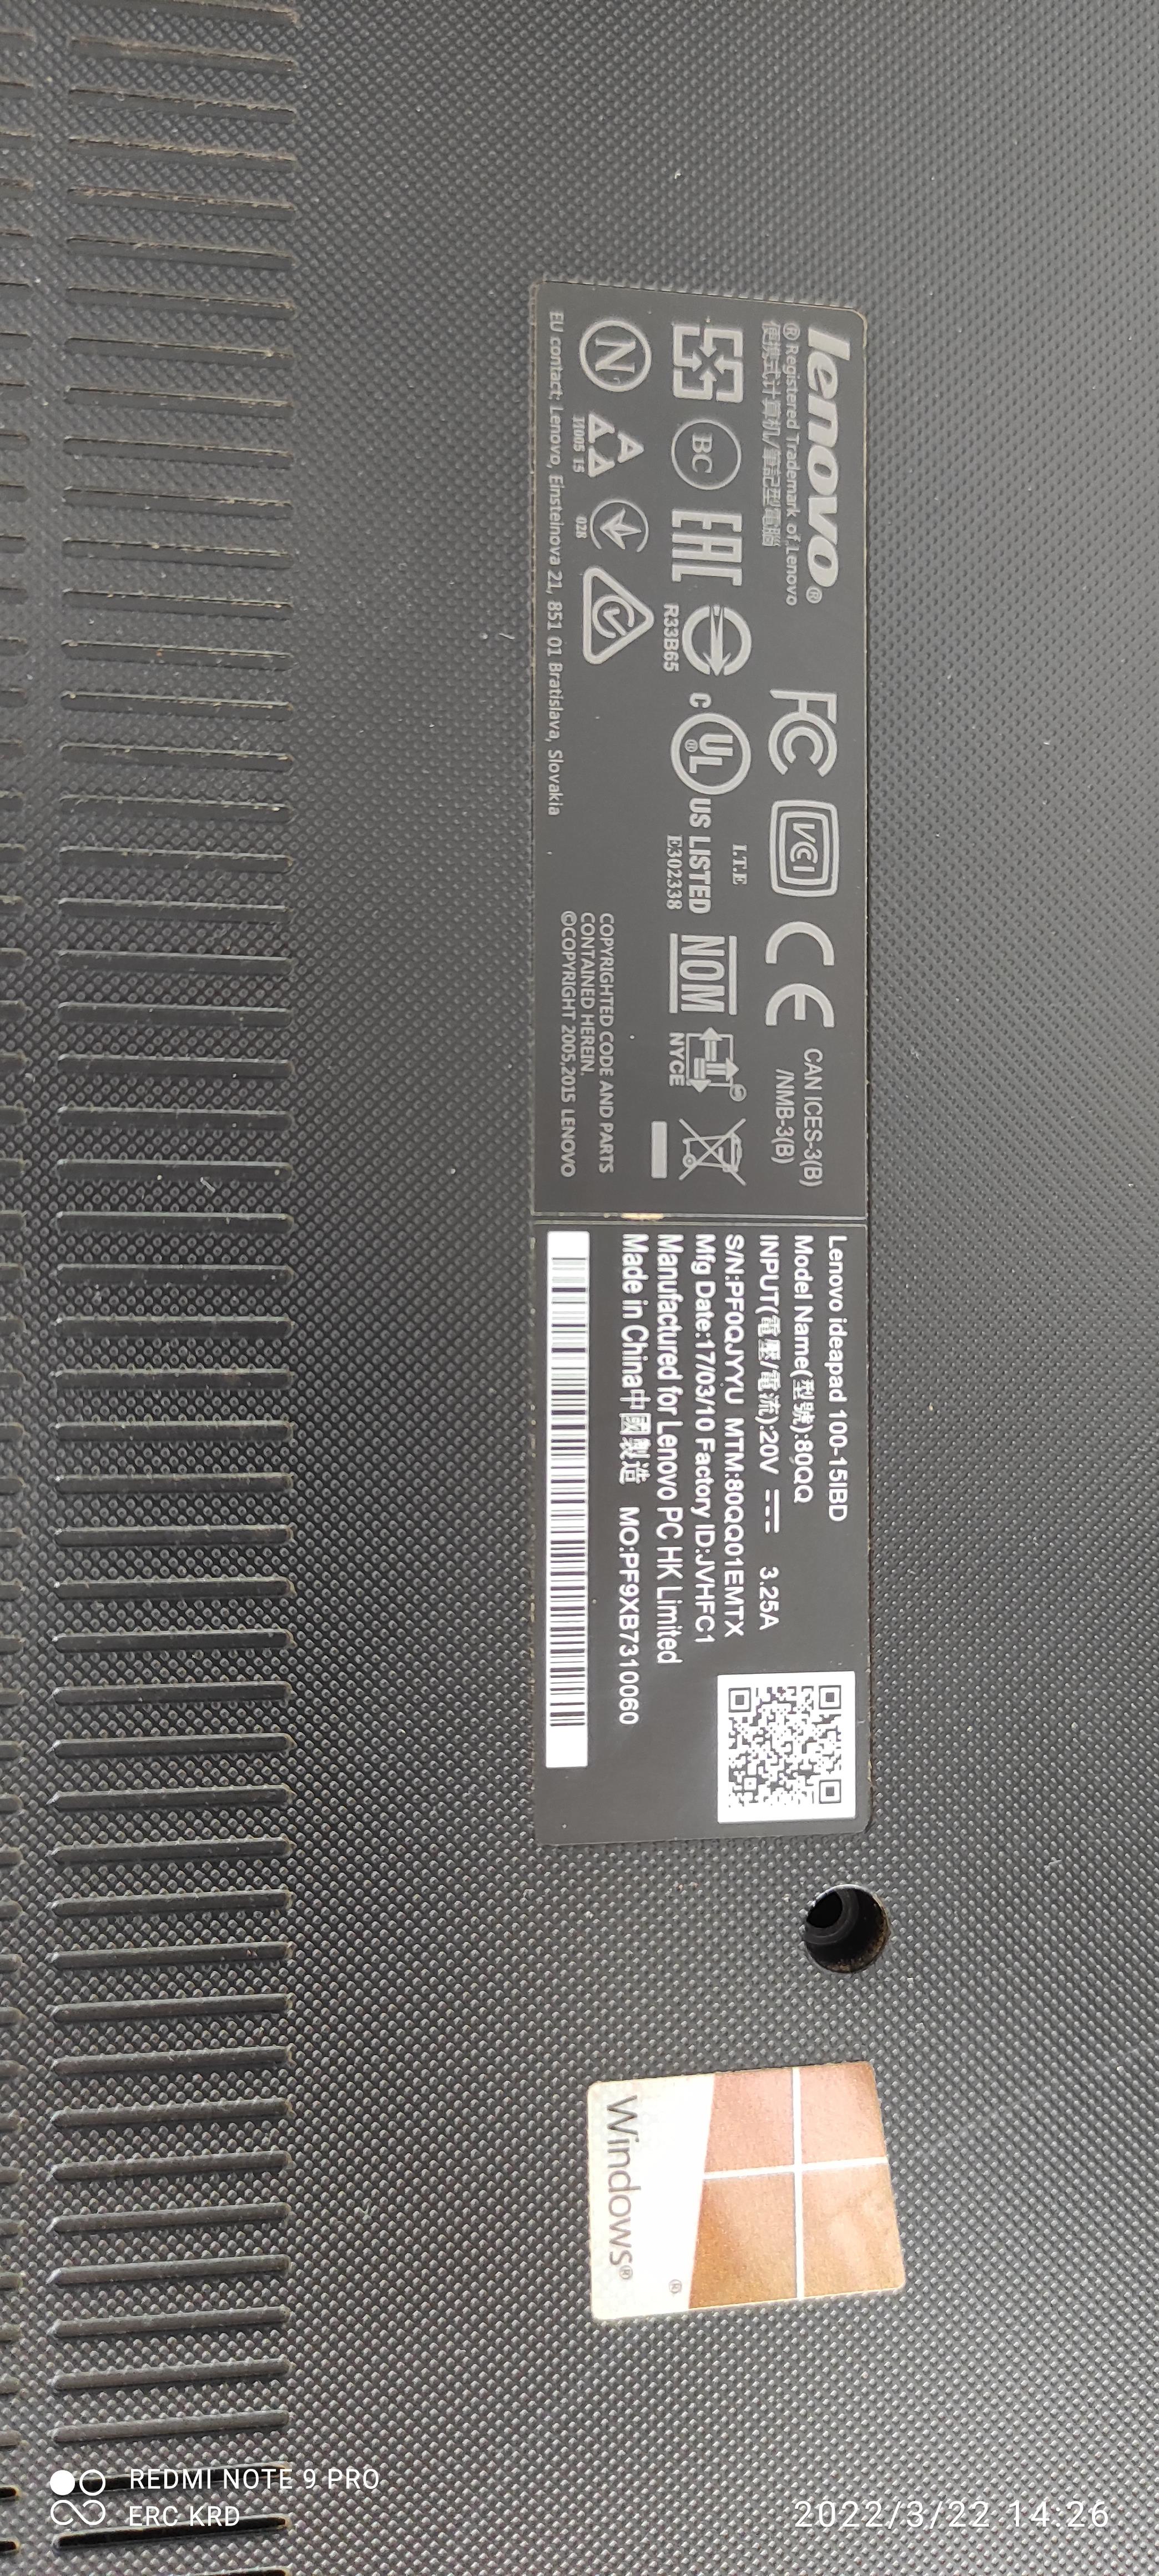 Lenovo IdeaPad 100 i5 4288U 8GB RAM 2GB HARİCİ GPU | DonanımHaber Forum